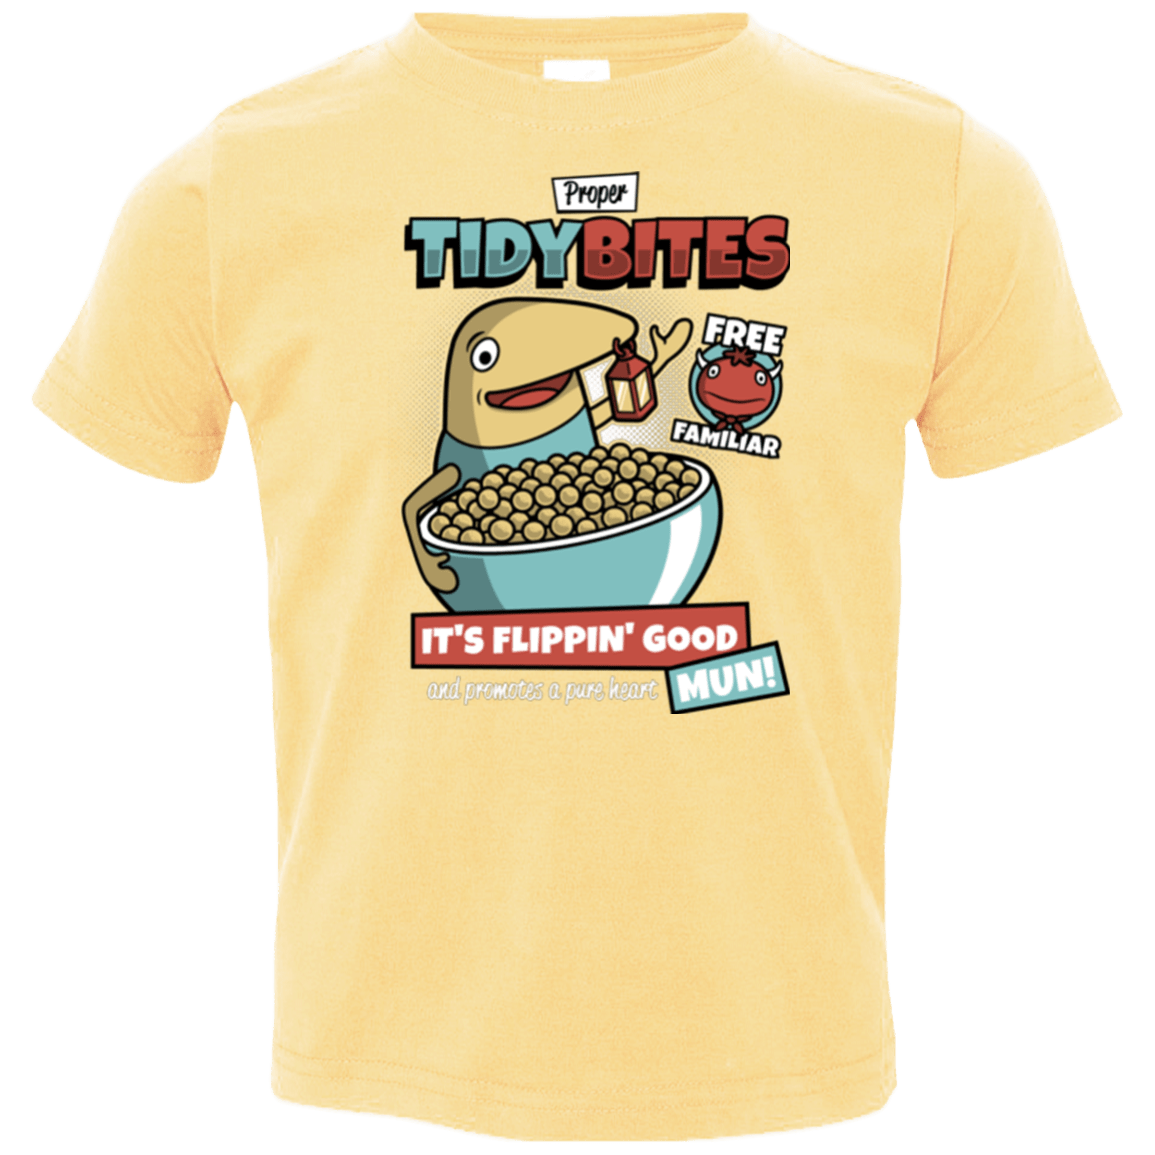 T-Shirts Butter / 2T PROPER TIDY BITES Toddler Premium T-Shirt